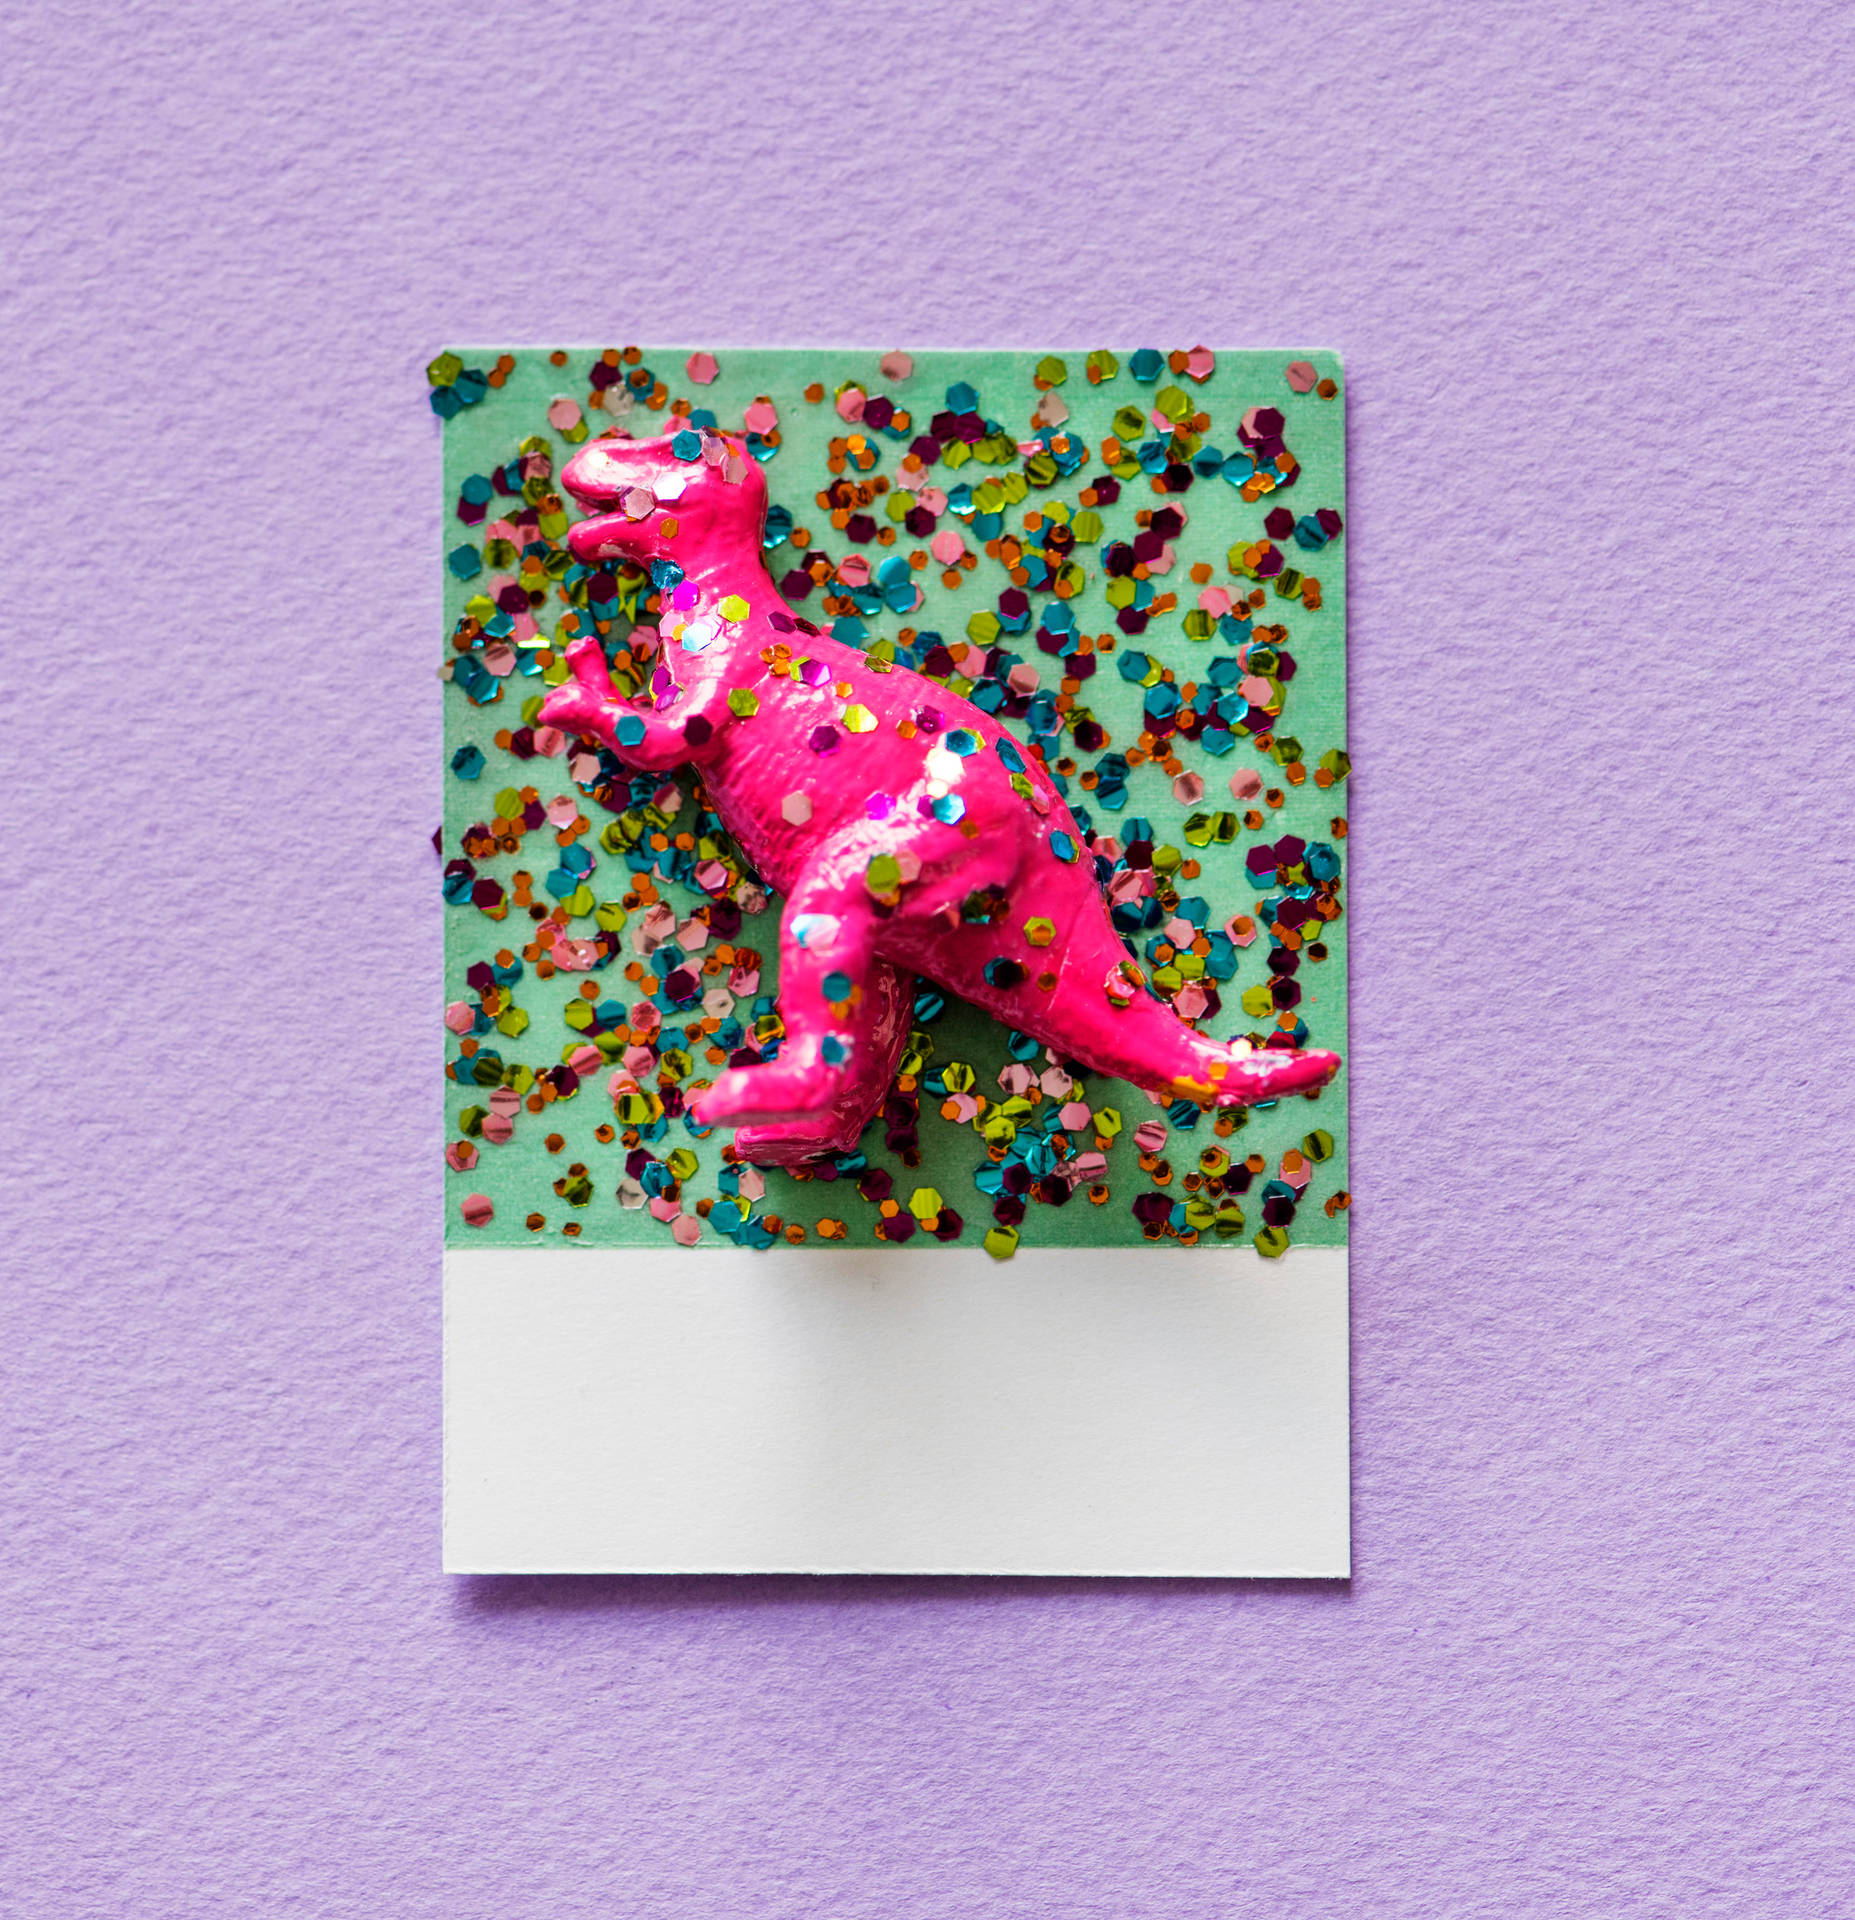 Cute Dinosaur Toy With Confetti Wallpaper